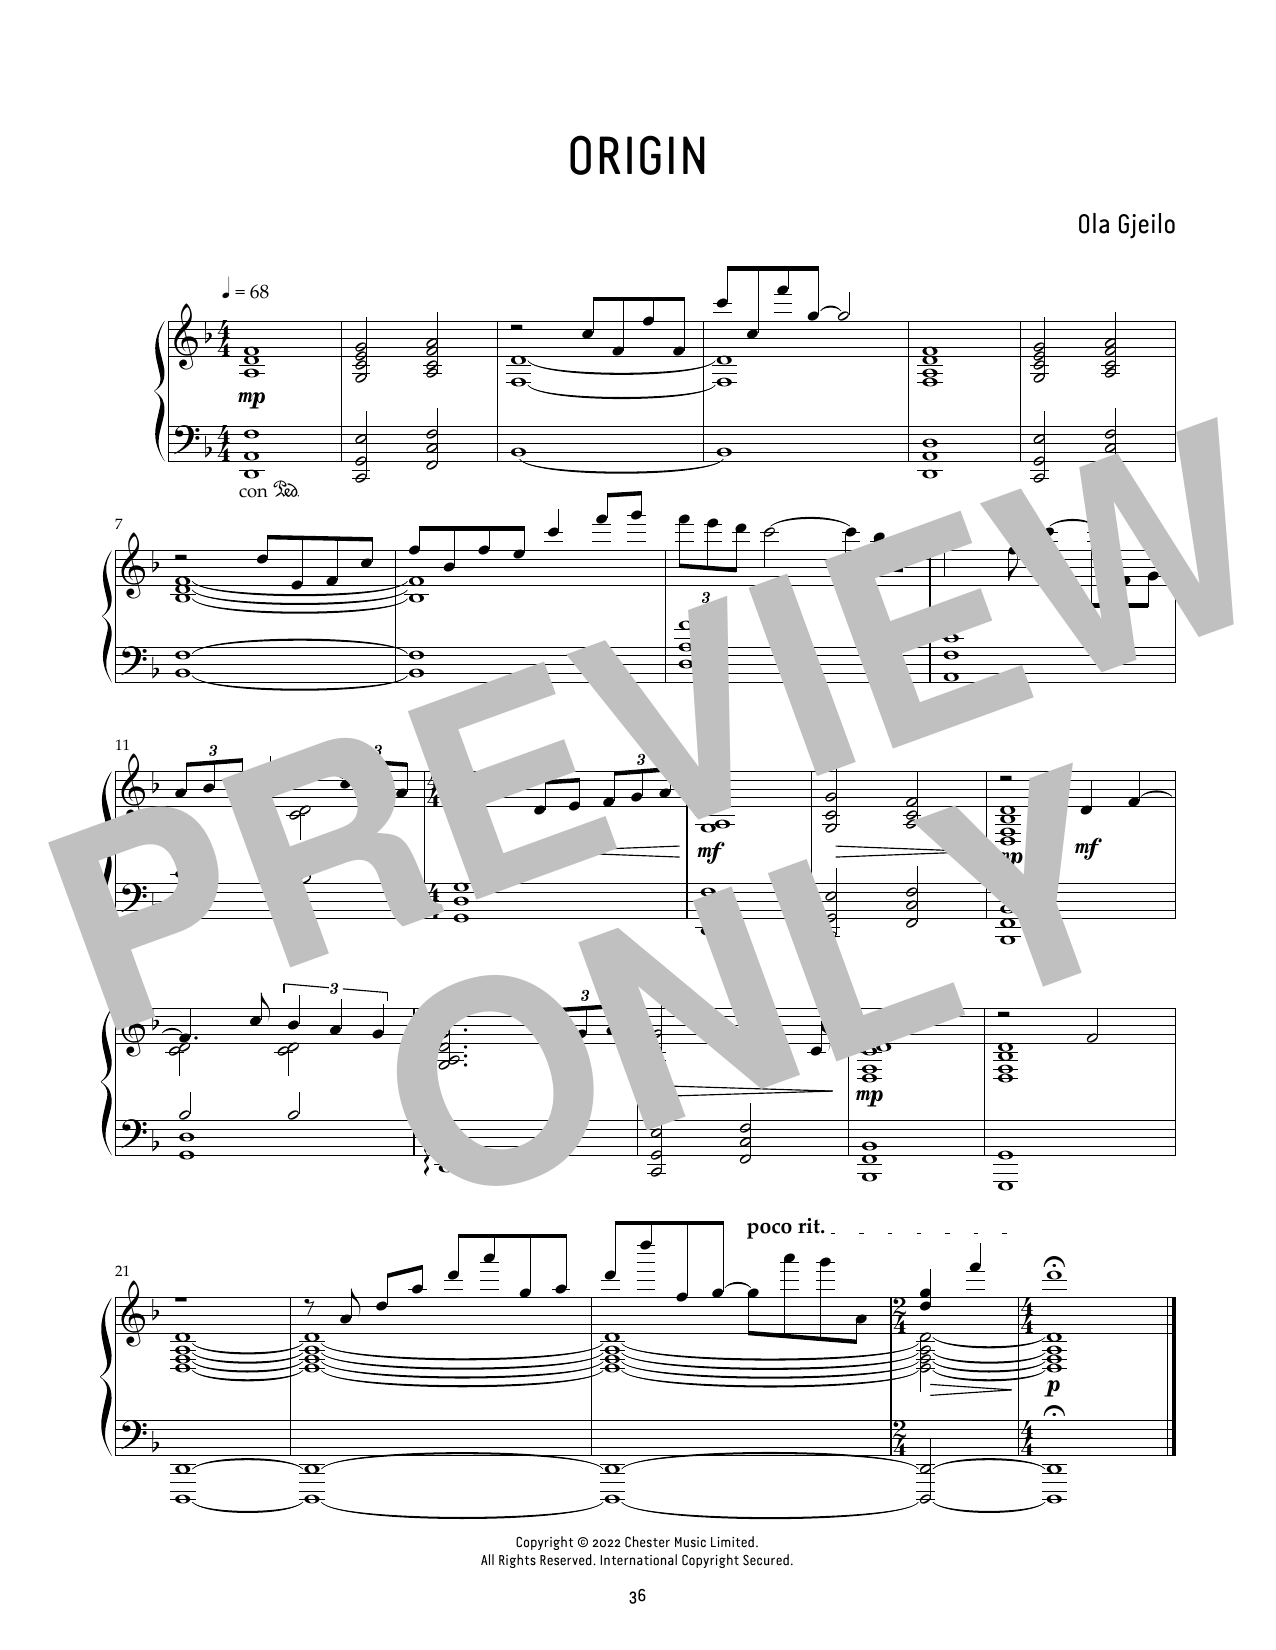 Ola Gjeilo Origin Sheet Music Notes & Chords for Piano Solo - Download or Print PDF